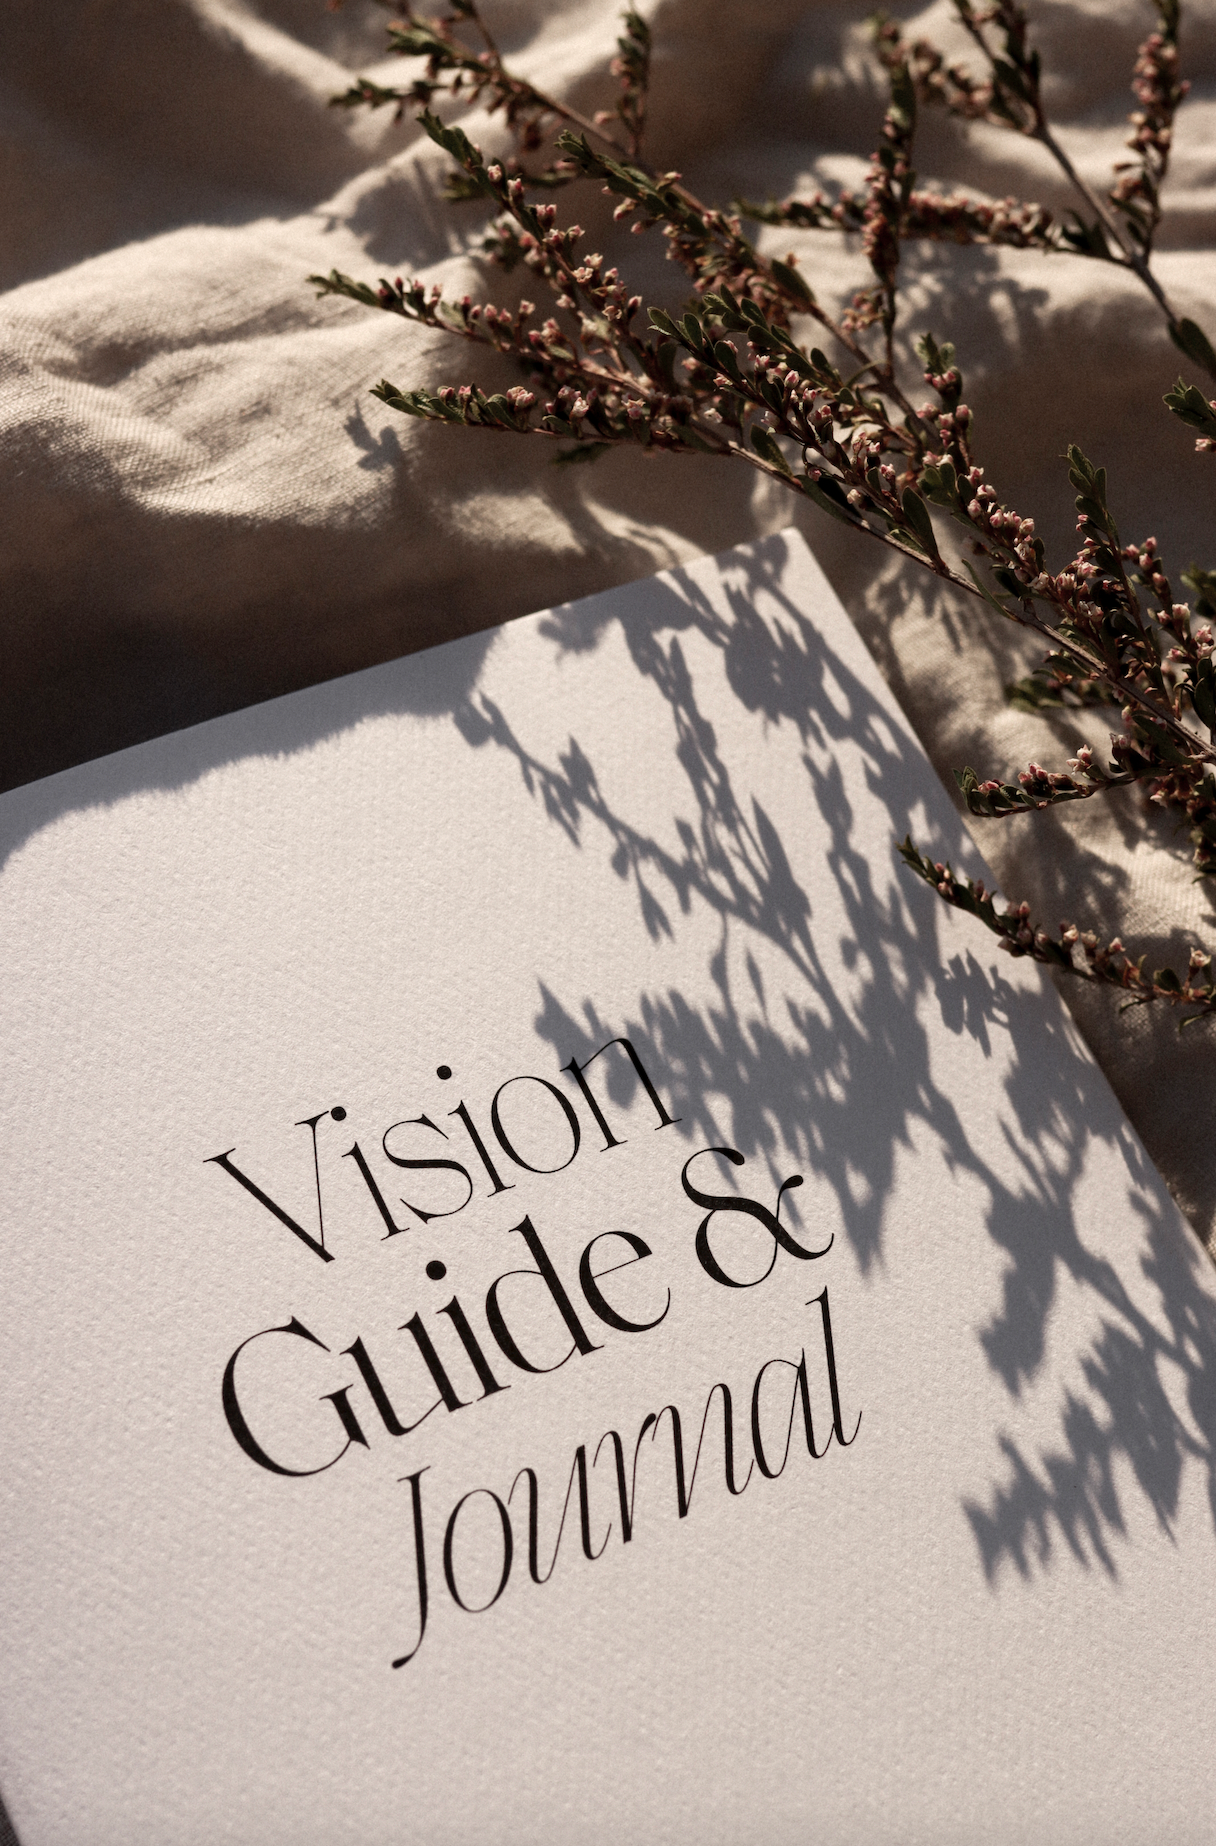 The Ultimate Vision Board Kit Bundle